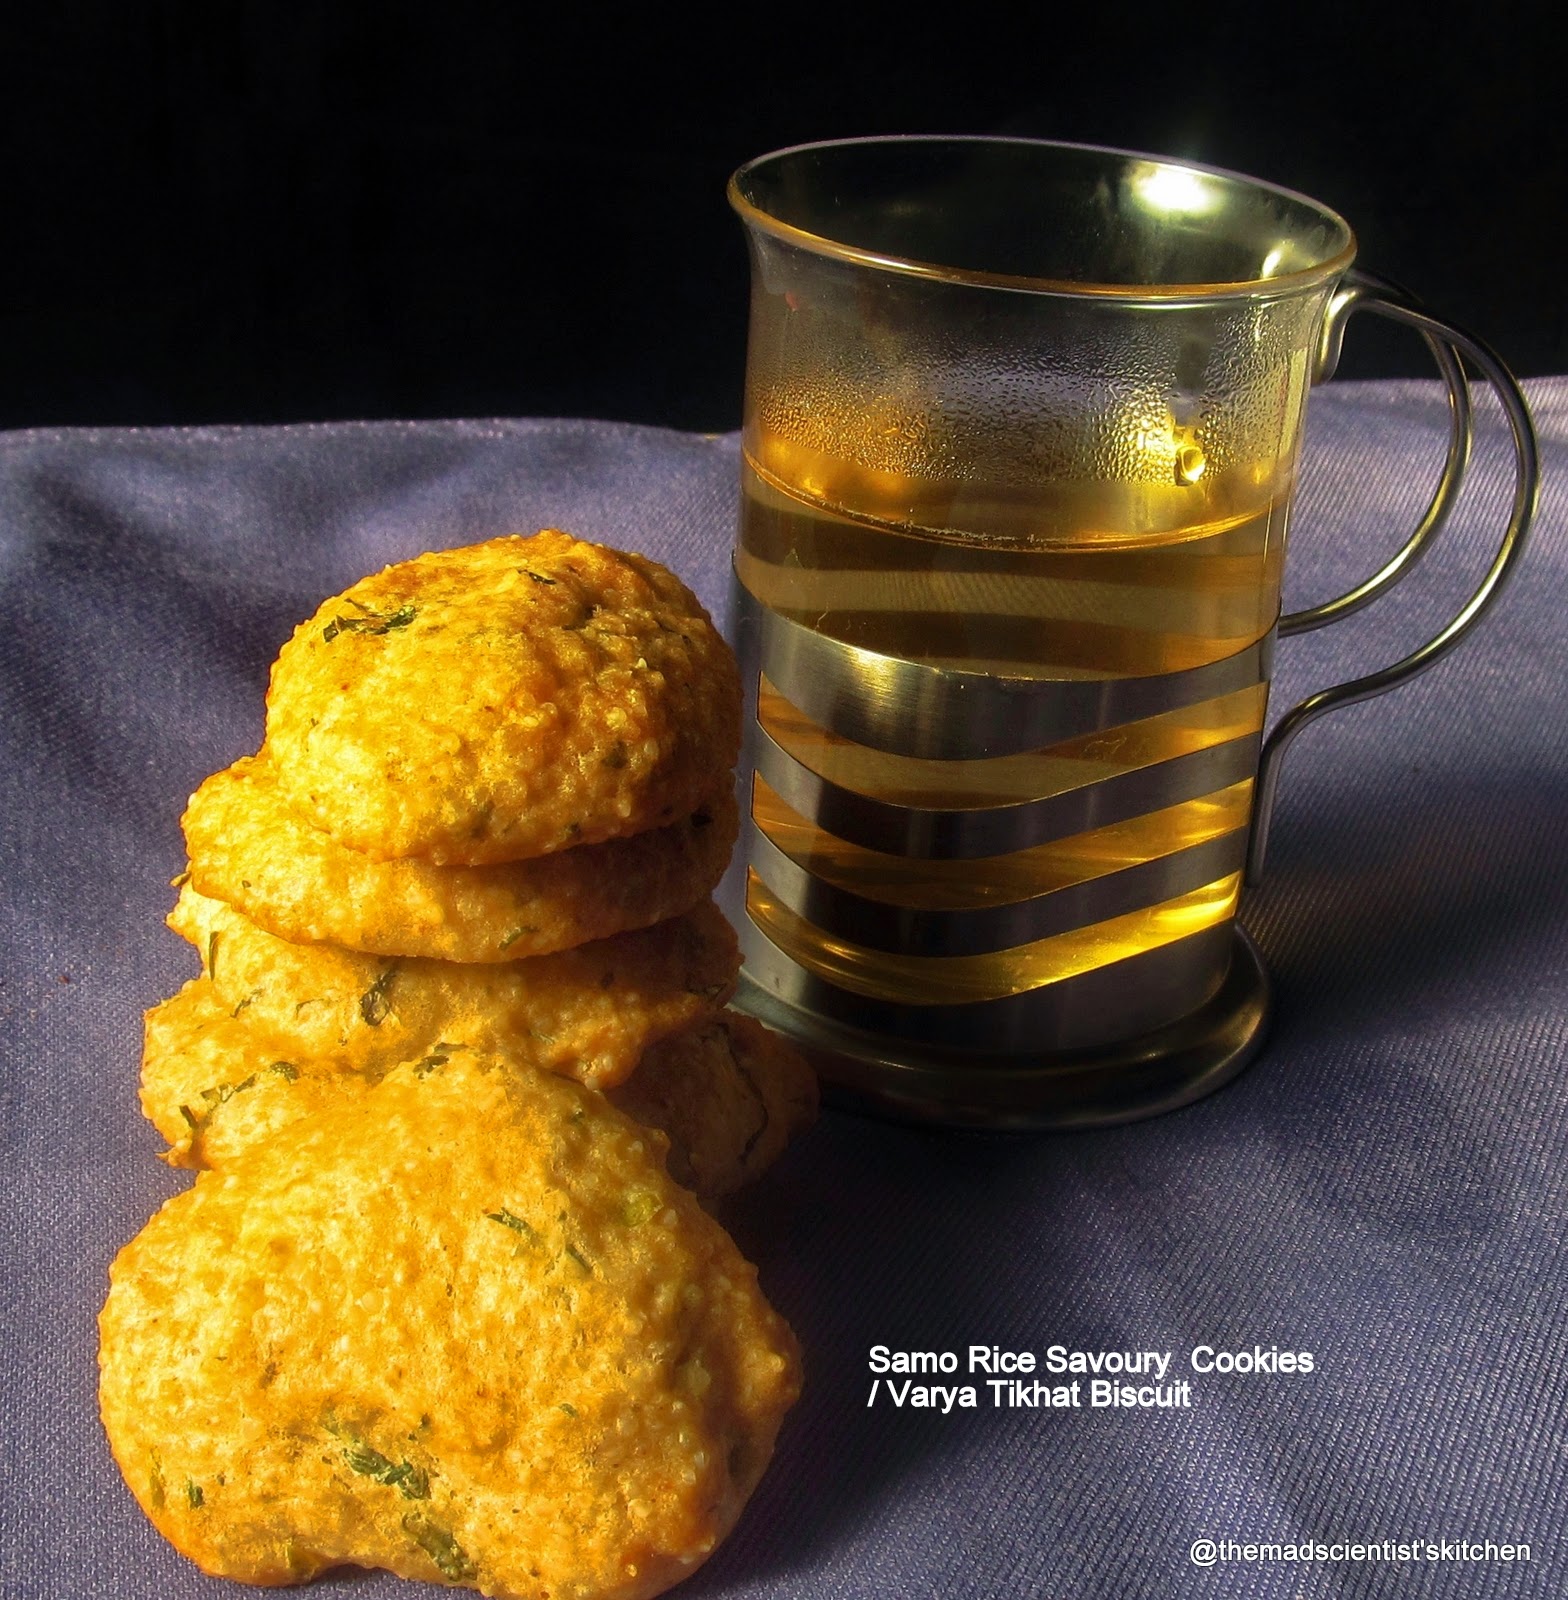 Samo Rice Savoury  Cookies/ Varya Tikhat Biscuit 